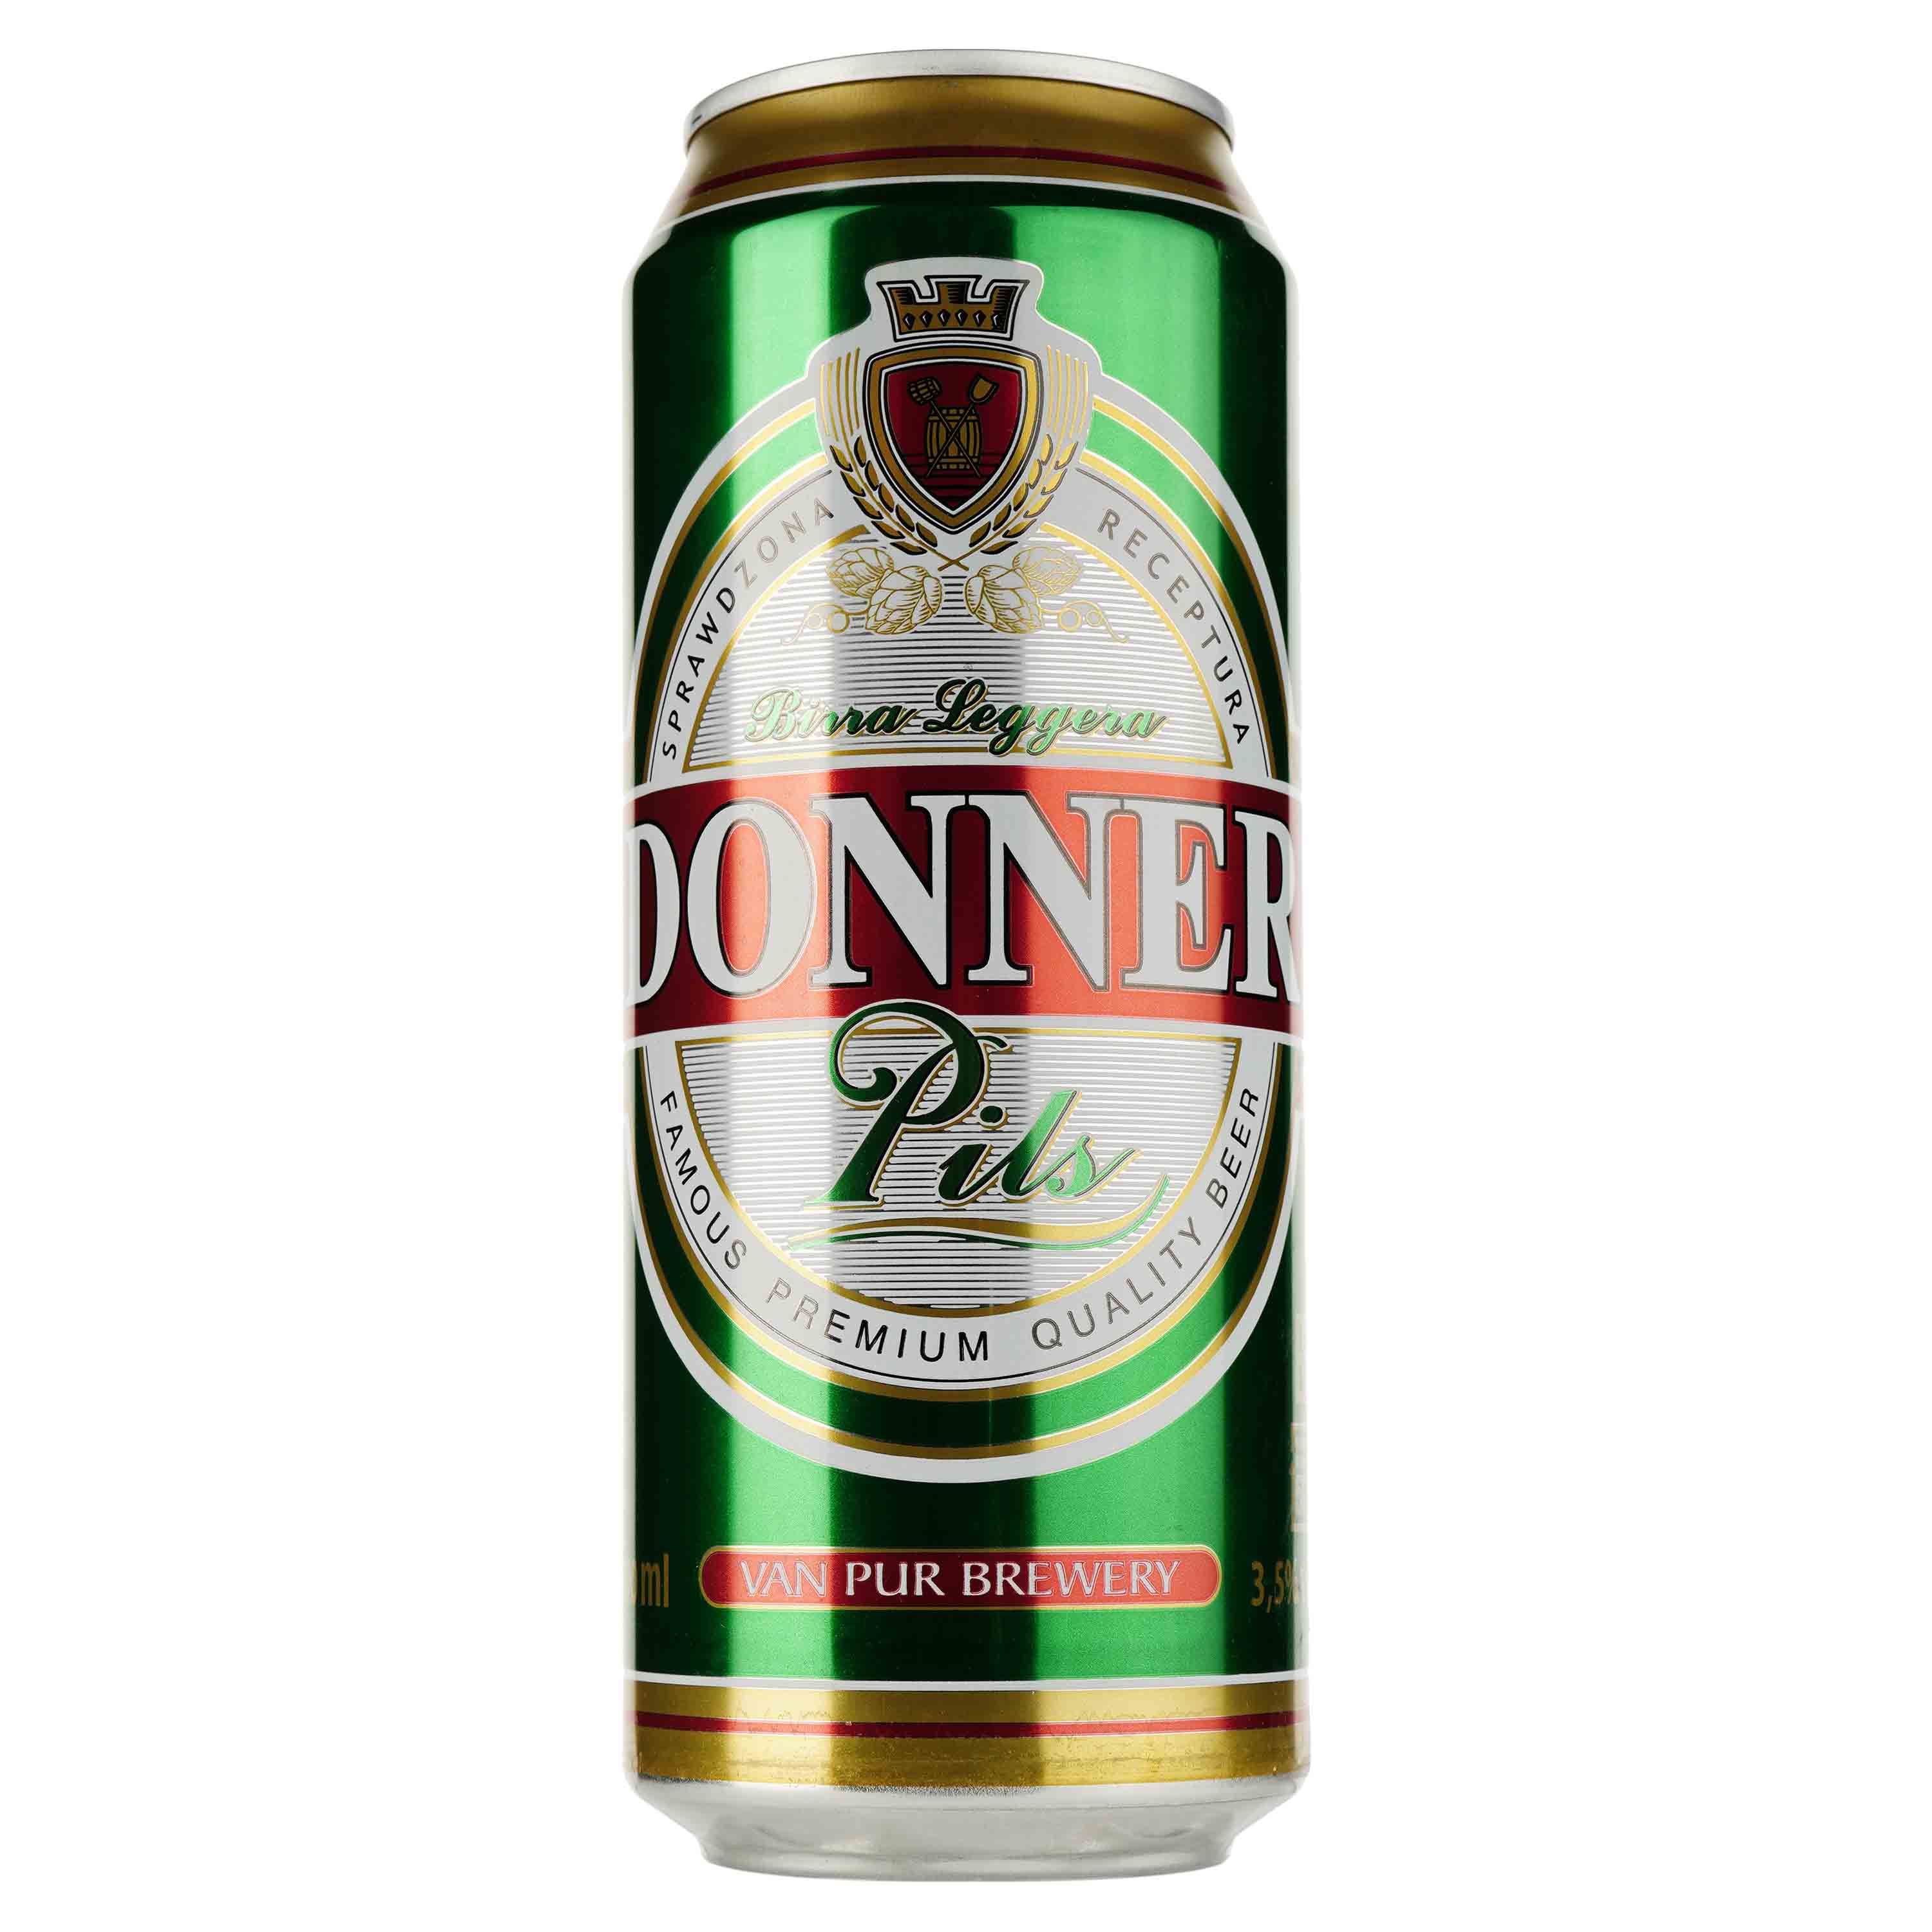 Пиво Donner Pils светлое, 3.5%, ж/б, 0.5 л - фото 1